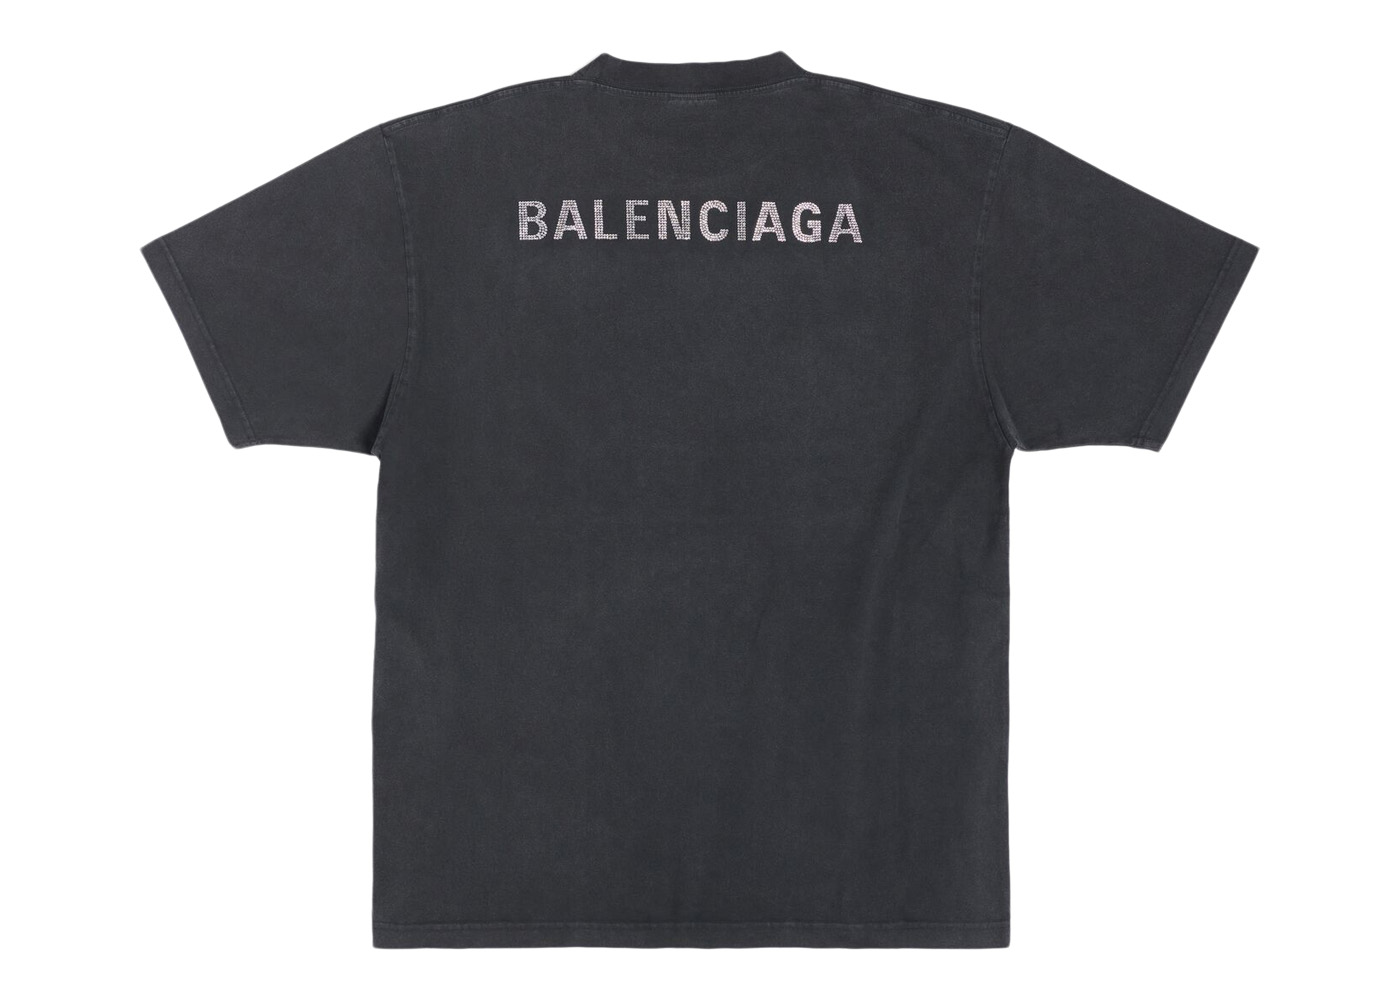 Balenciaga Large Fit T-shirt White - SS21 - US